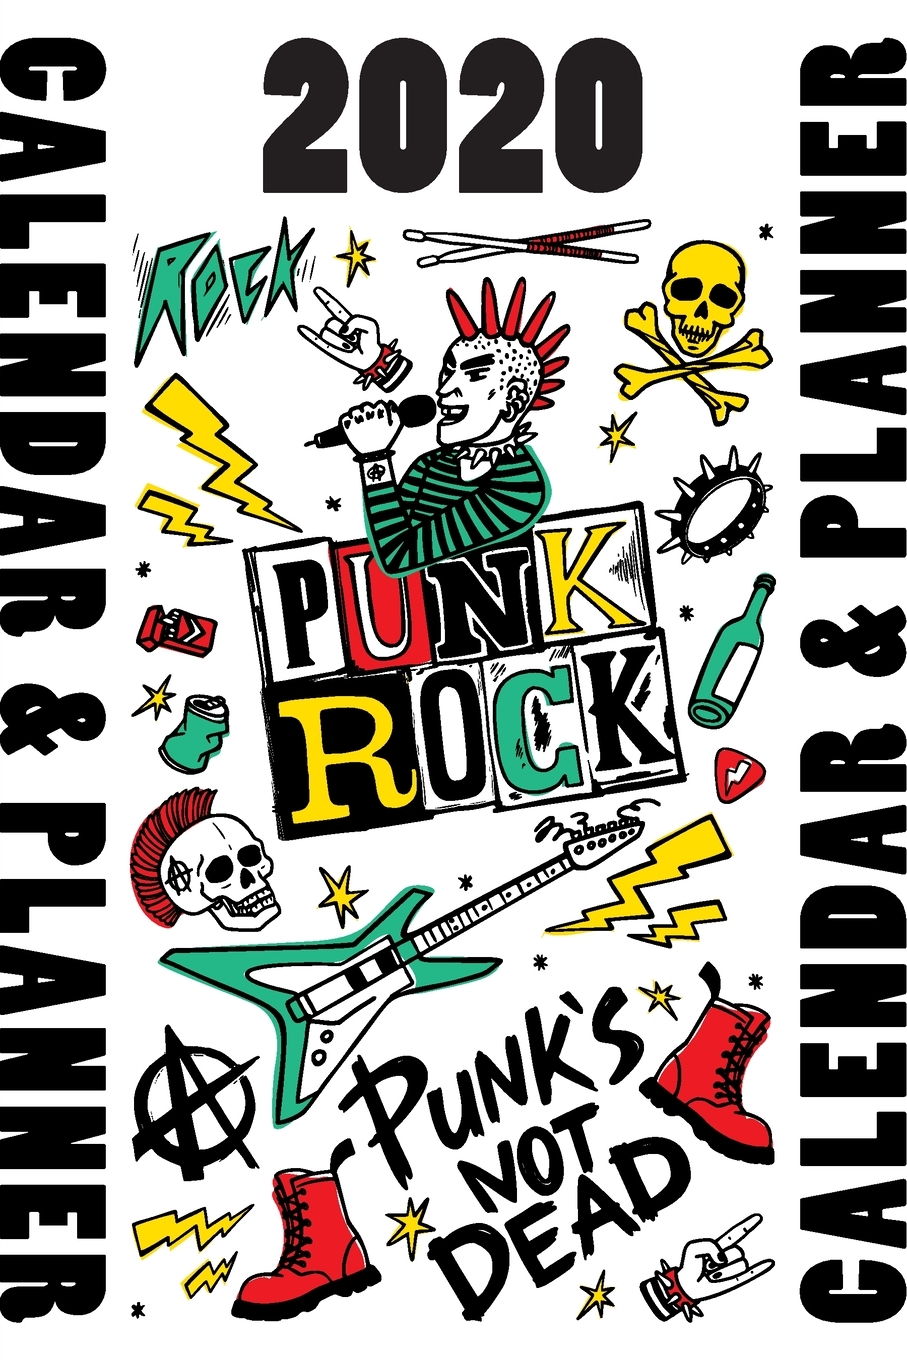 2020 Punk Rock Calendar & Planner: Punk's Not Dead (Paperback) - image 1 of 1